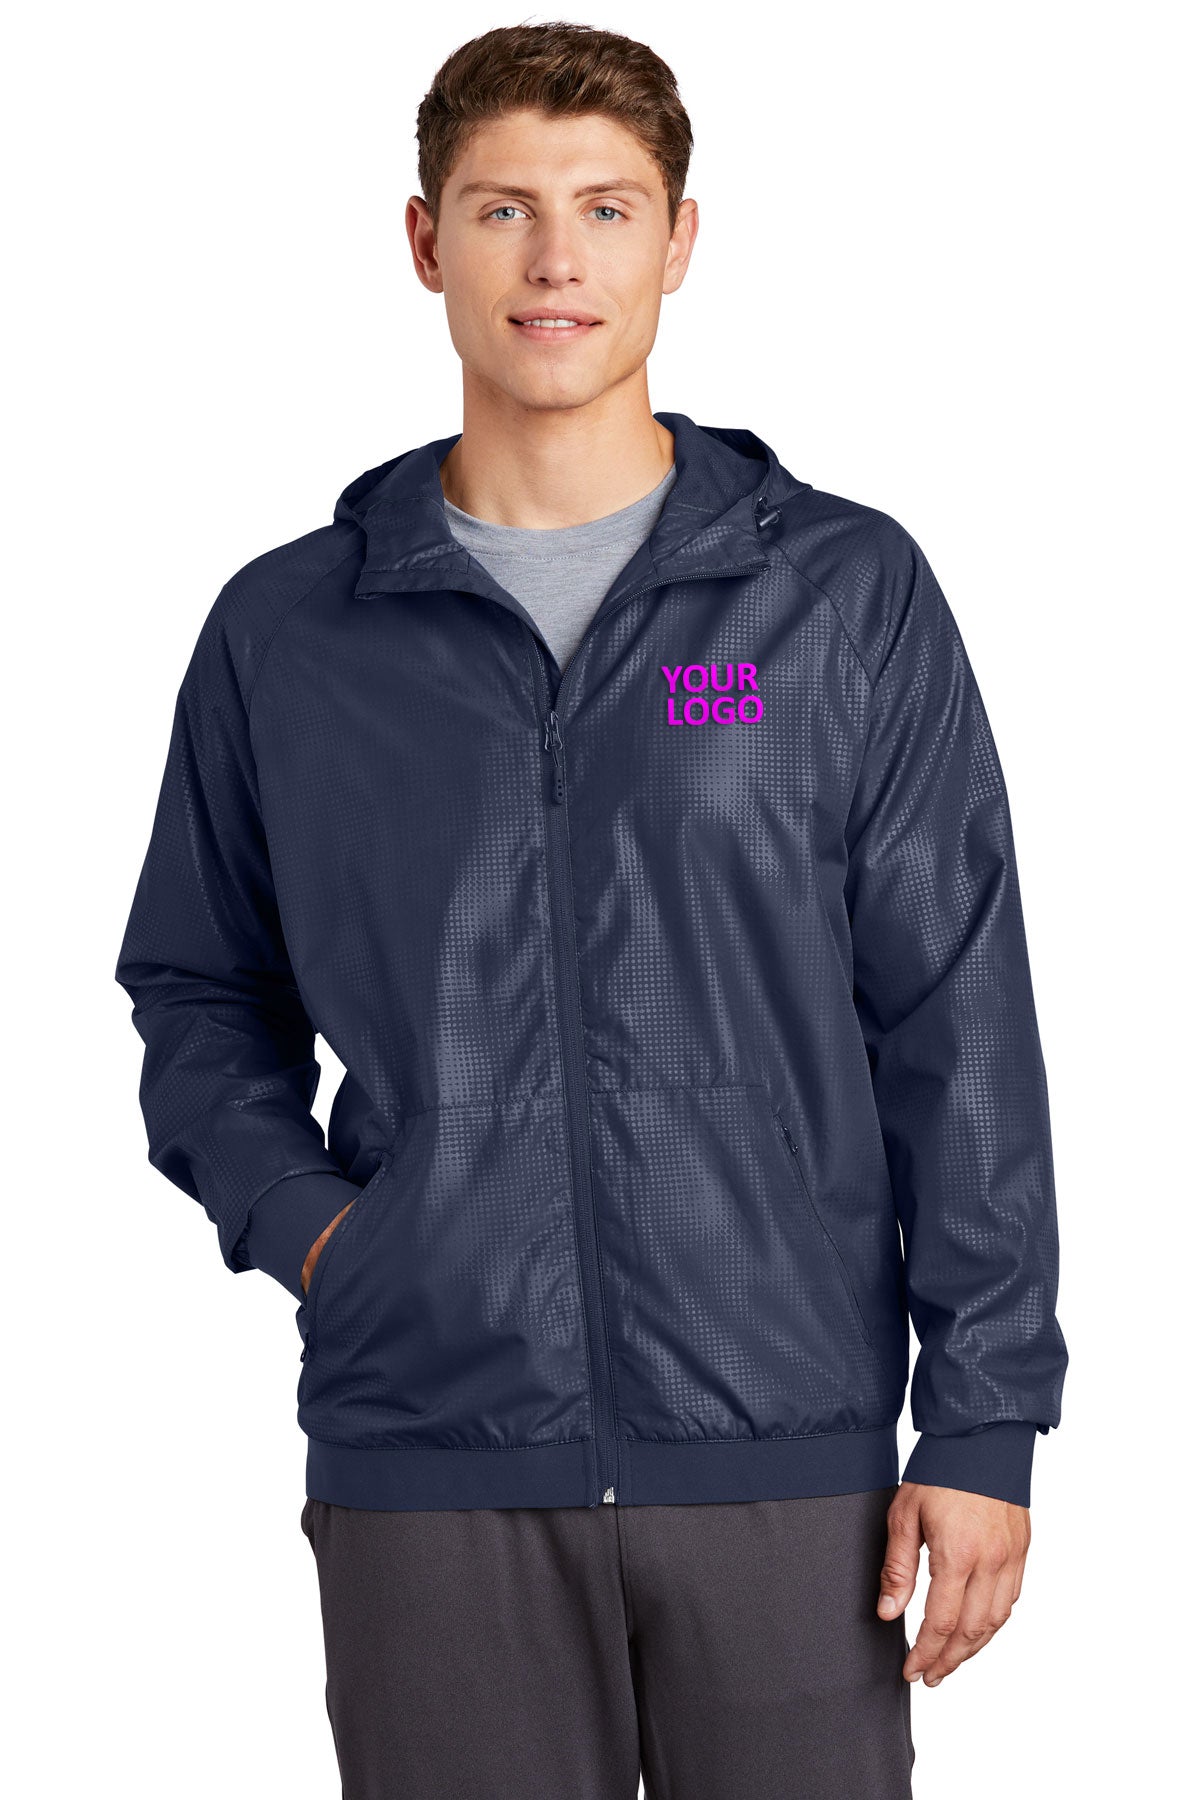 Sport-Tek True Navy/ True Navy JST53 embroidered team jackets